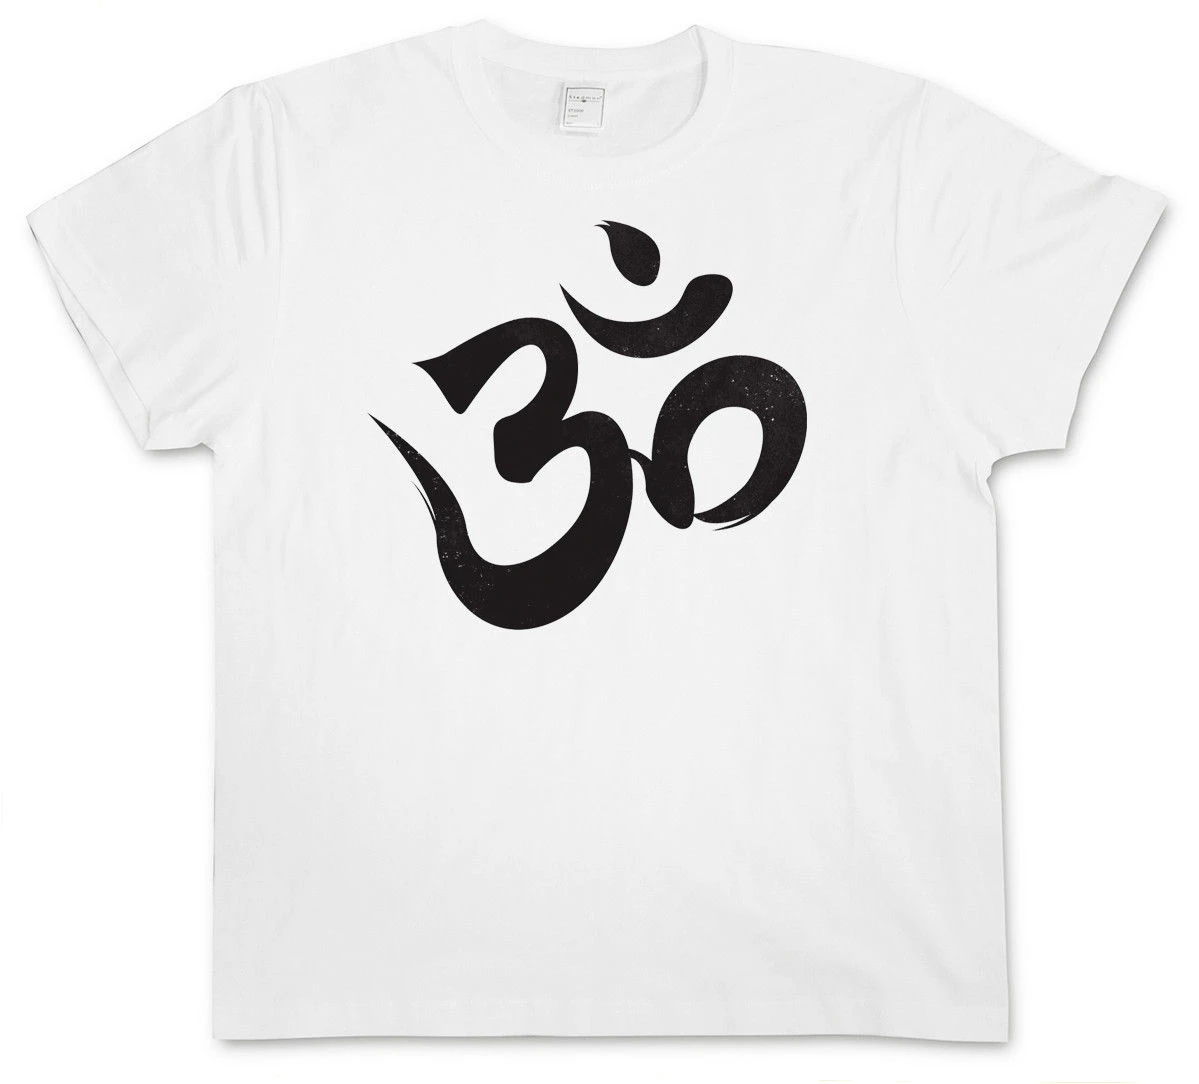 OM SIGN LOGO T SHIRT India Shiva Buddha Govinda Buddhism India S 3XL T Shirt  Novelty Cool Tops Men'S Short Sleeve T Shirt|T-Shirts| - AliExpress